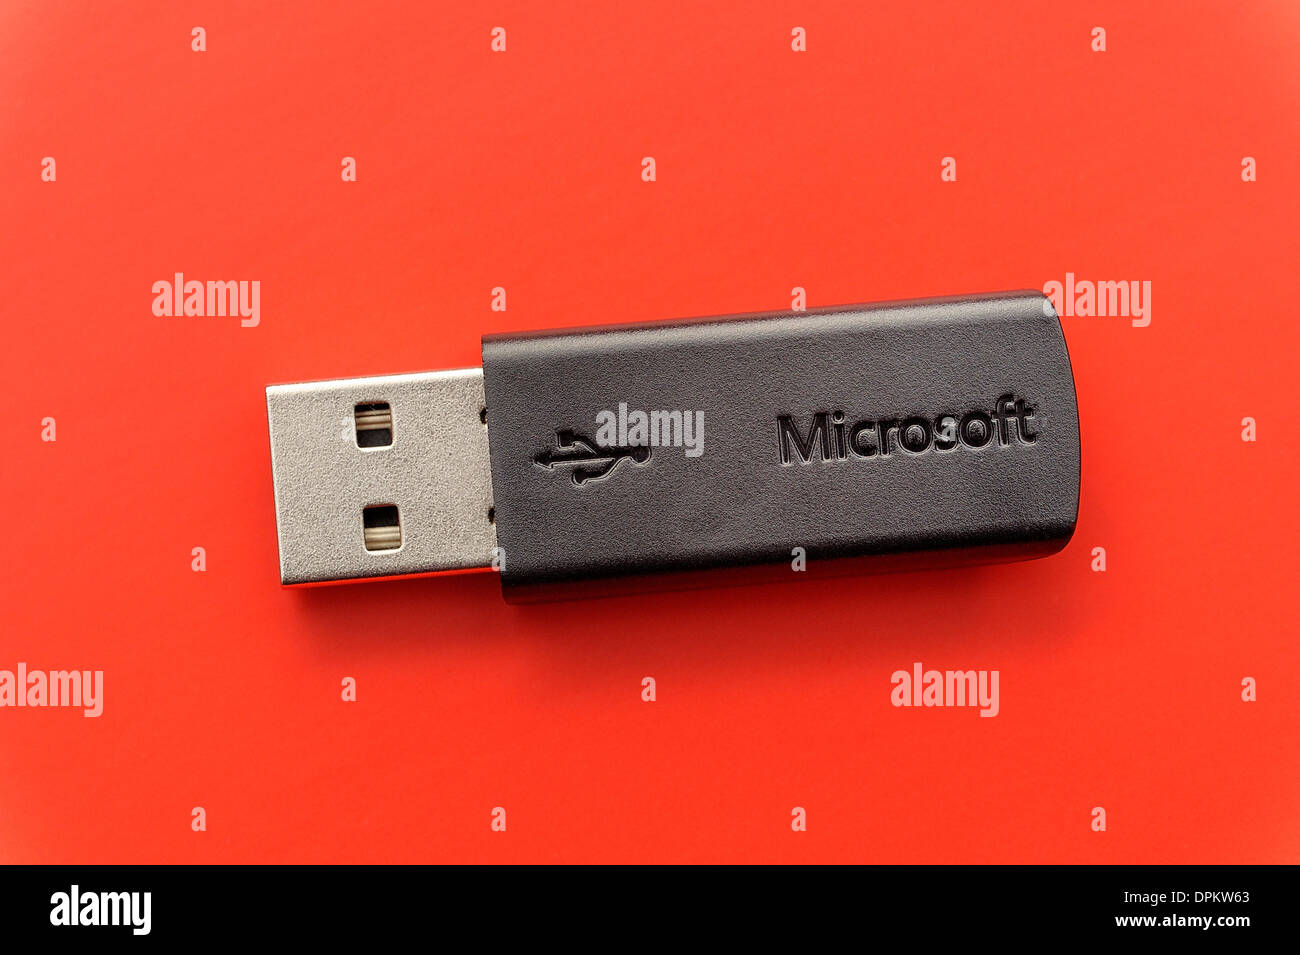 Microsoft wireless USB dongle Stock Photo - Alamy